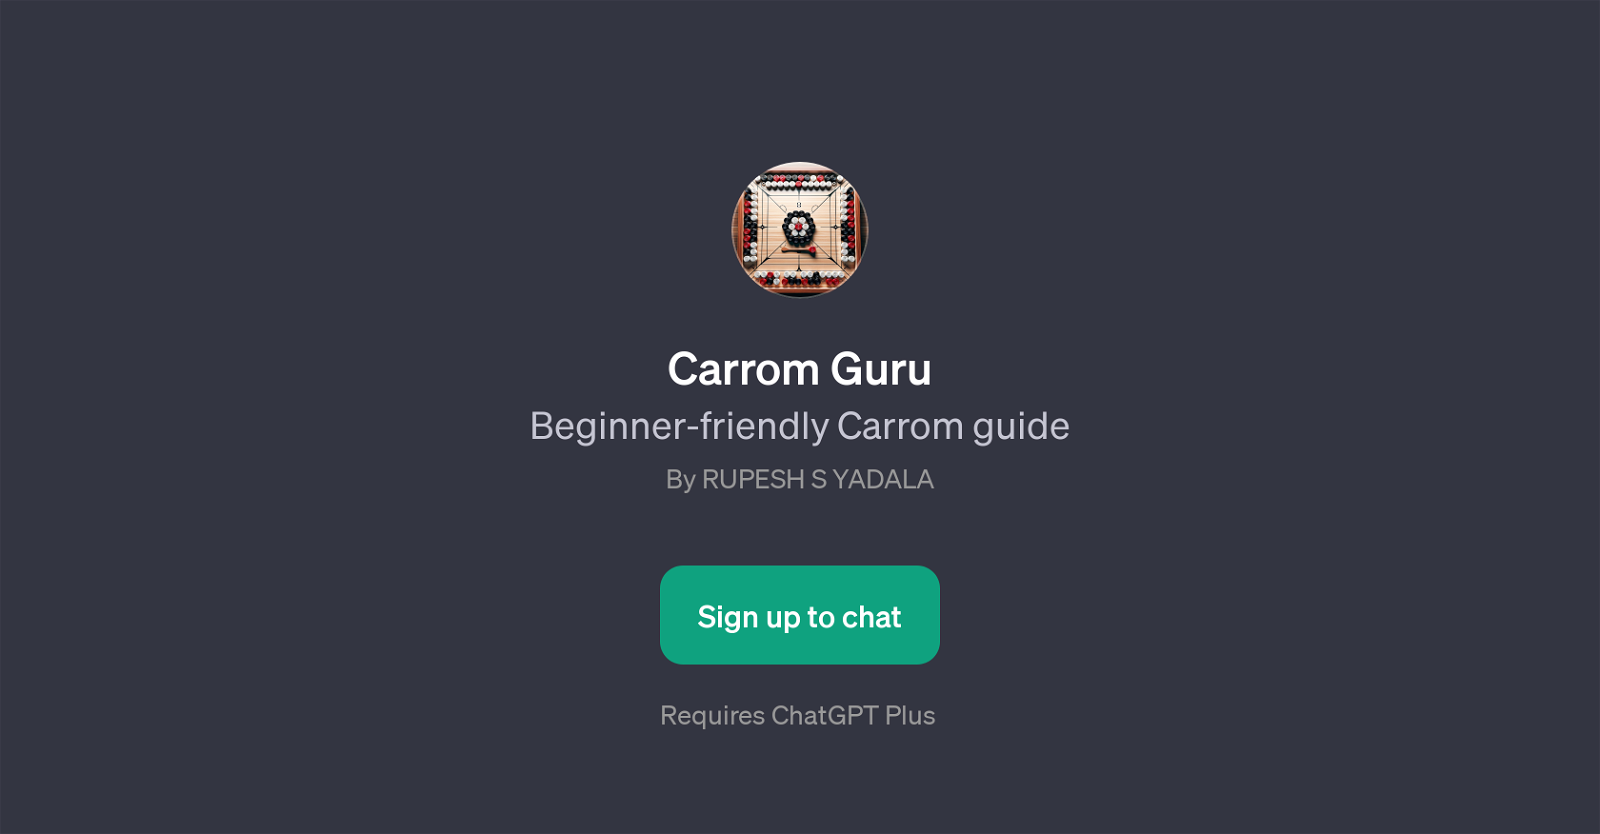 Carrom Guru website